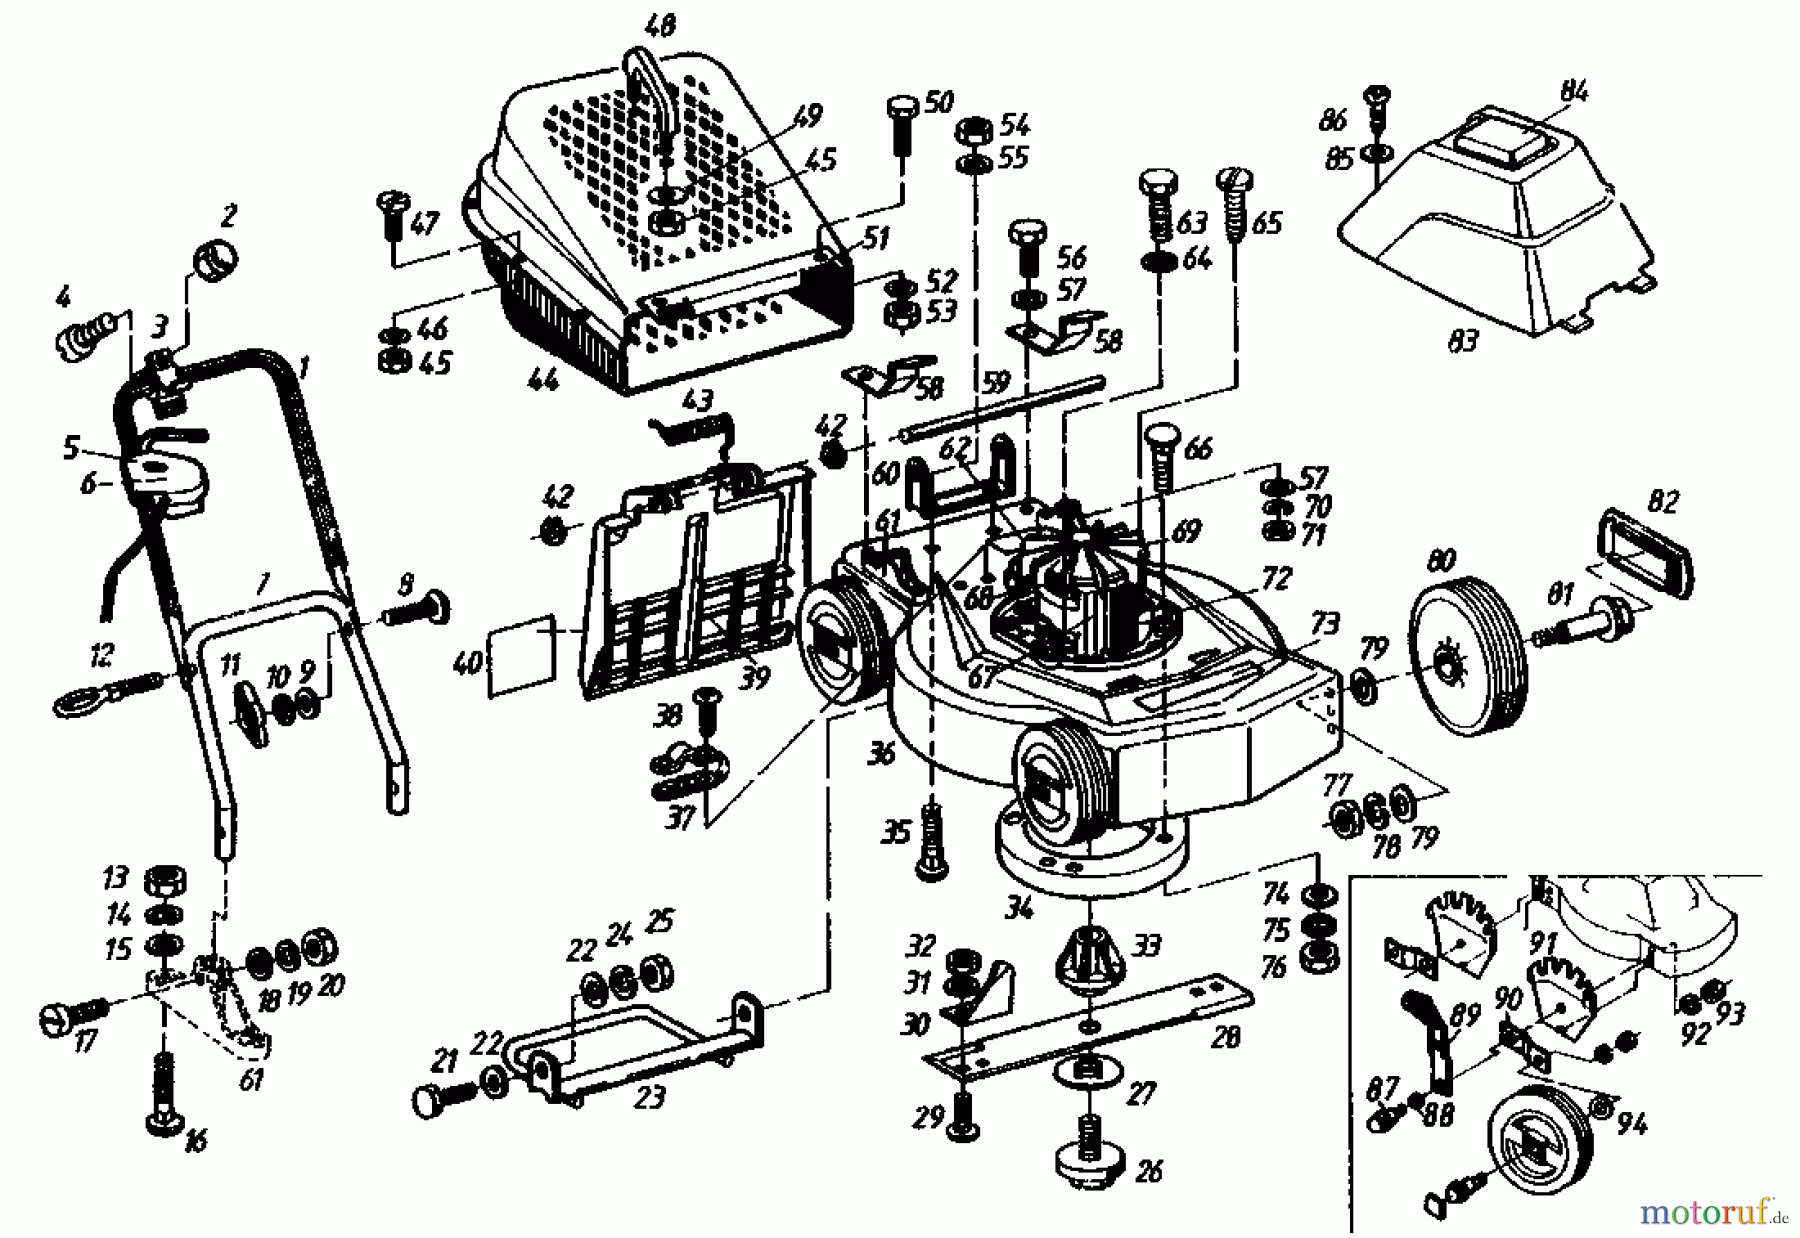  Gutbrod Electric mower TURBO 45 E 02875.01  (1985) Basic machine